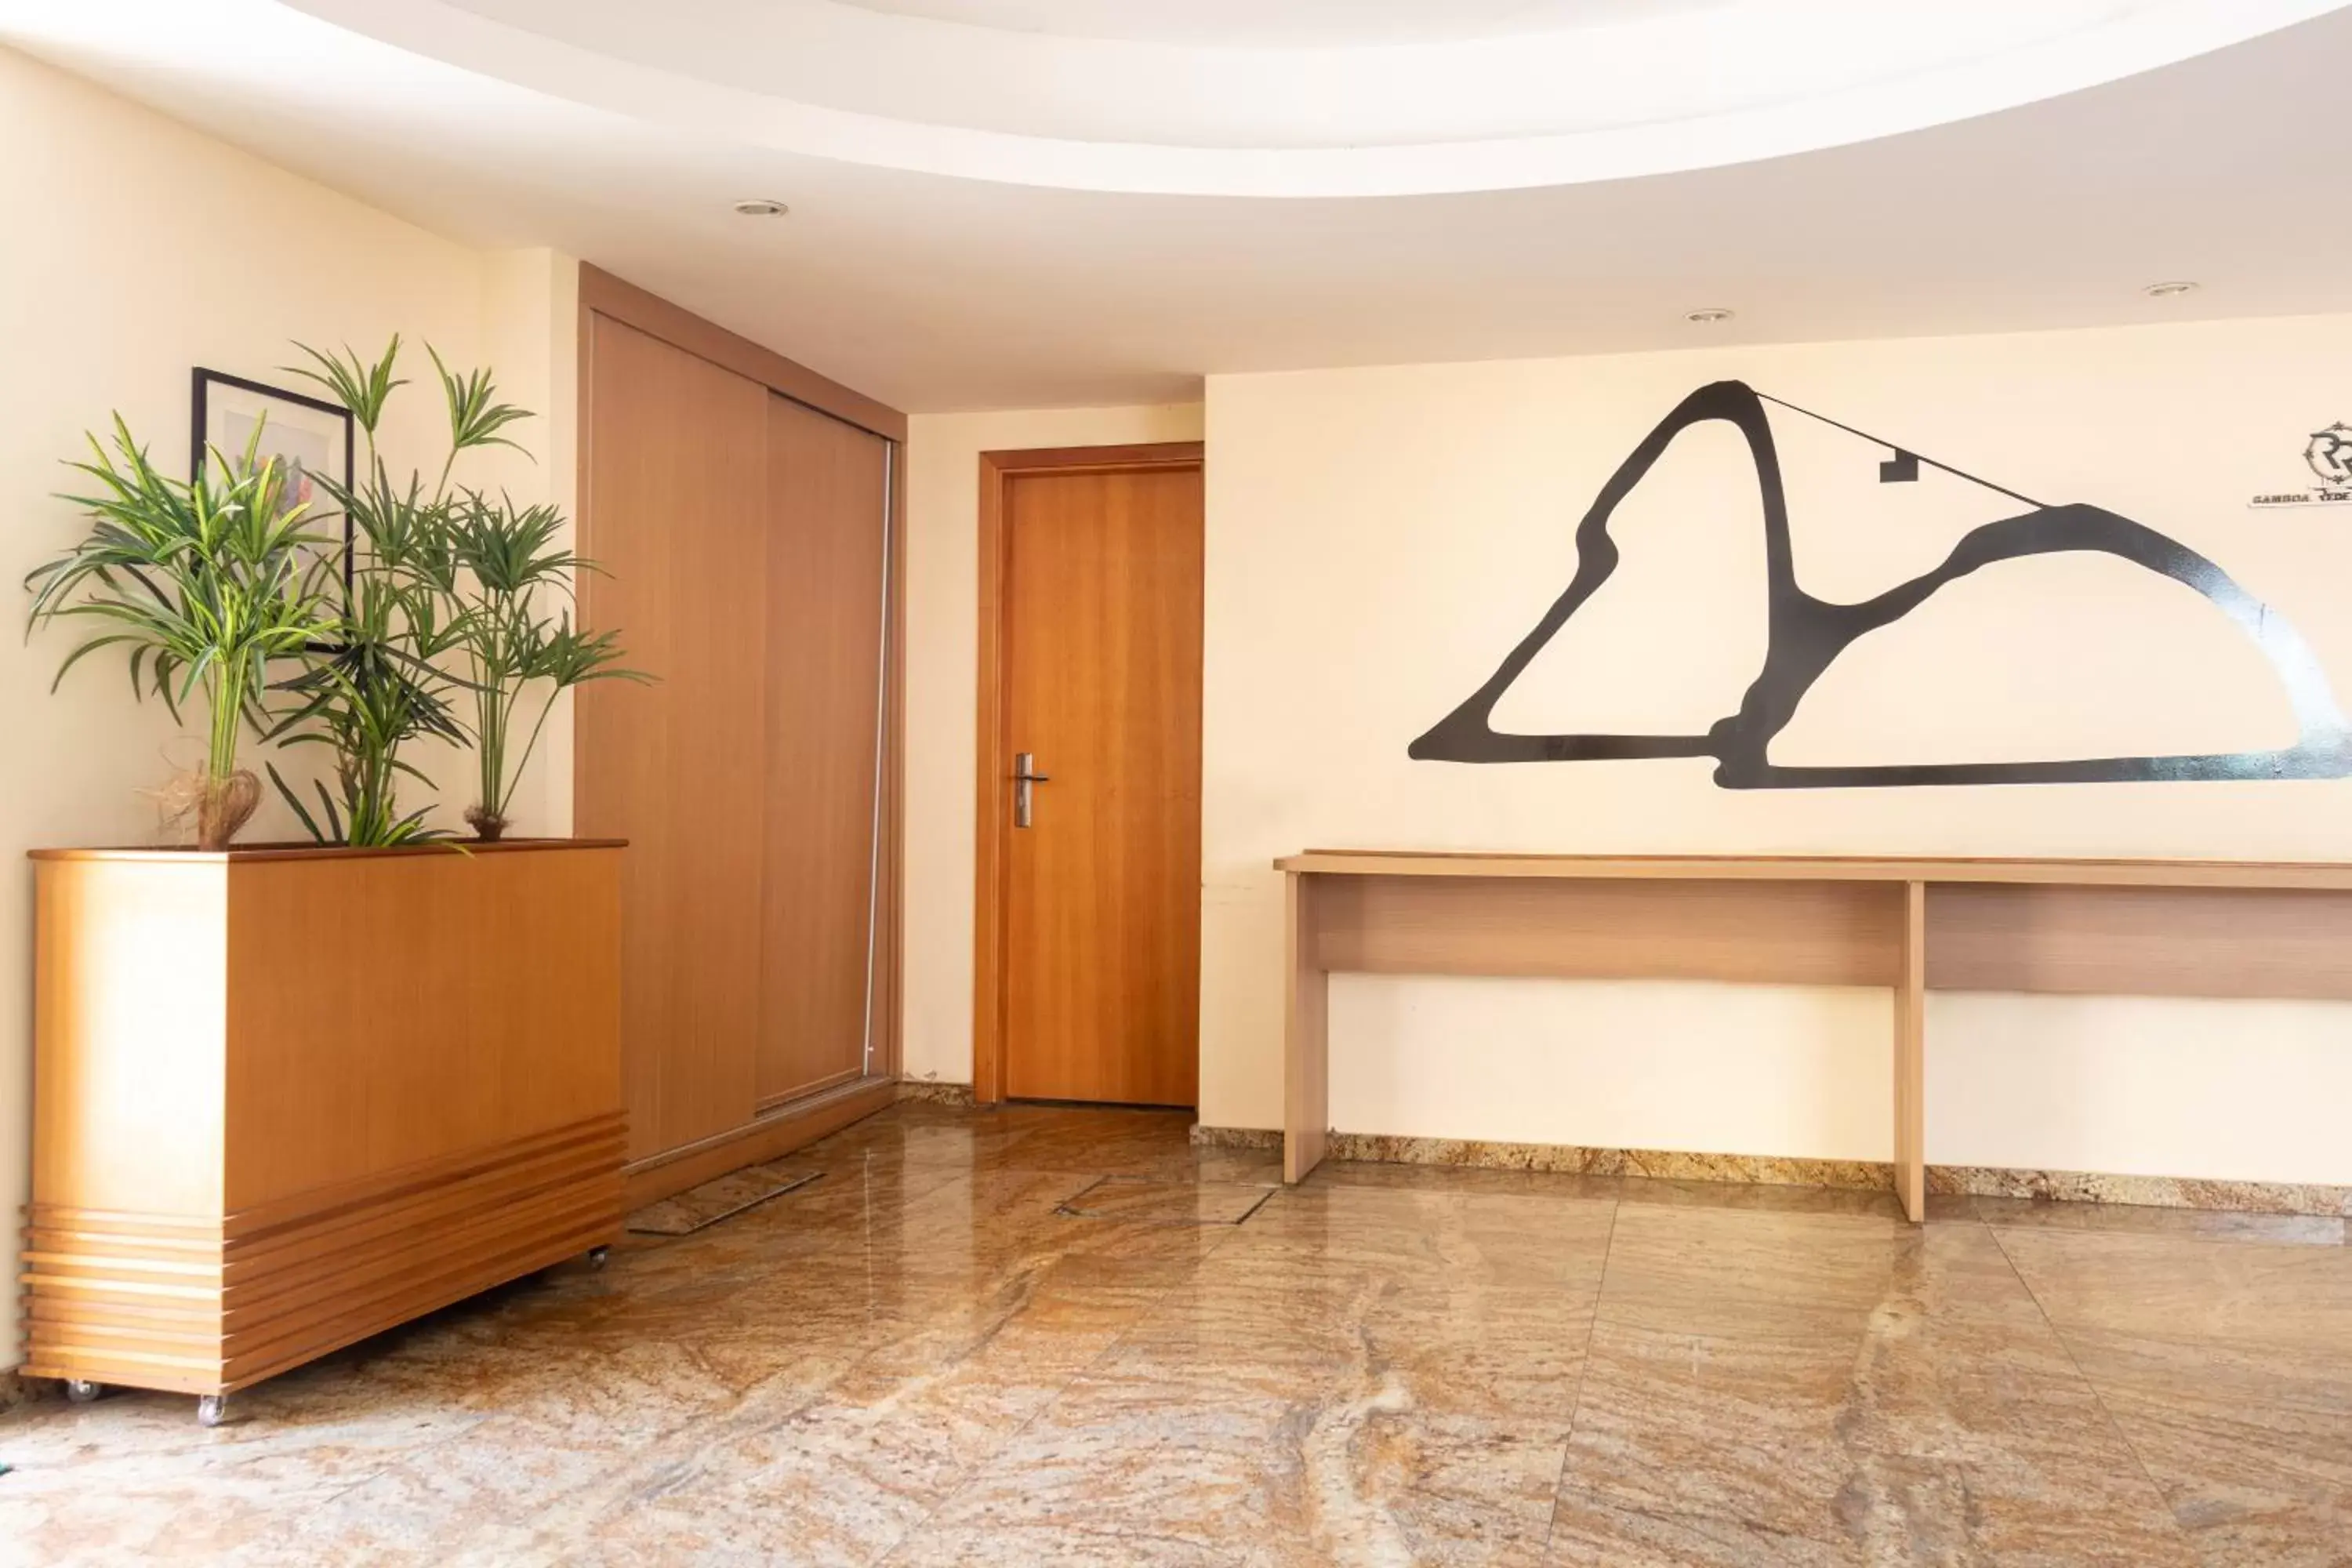 Lobby or reception in Gamboa Rio Hotel